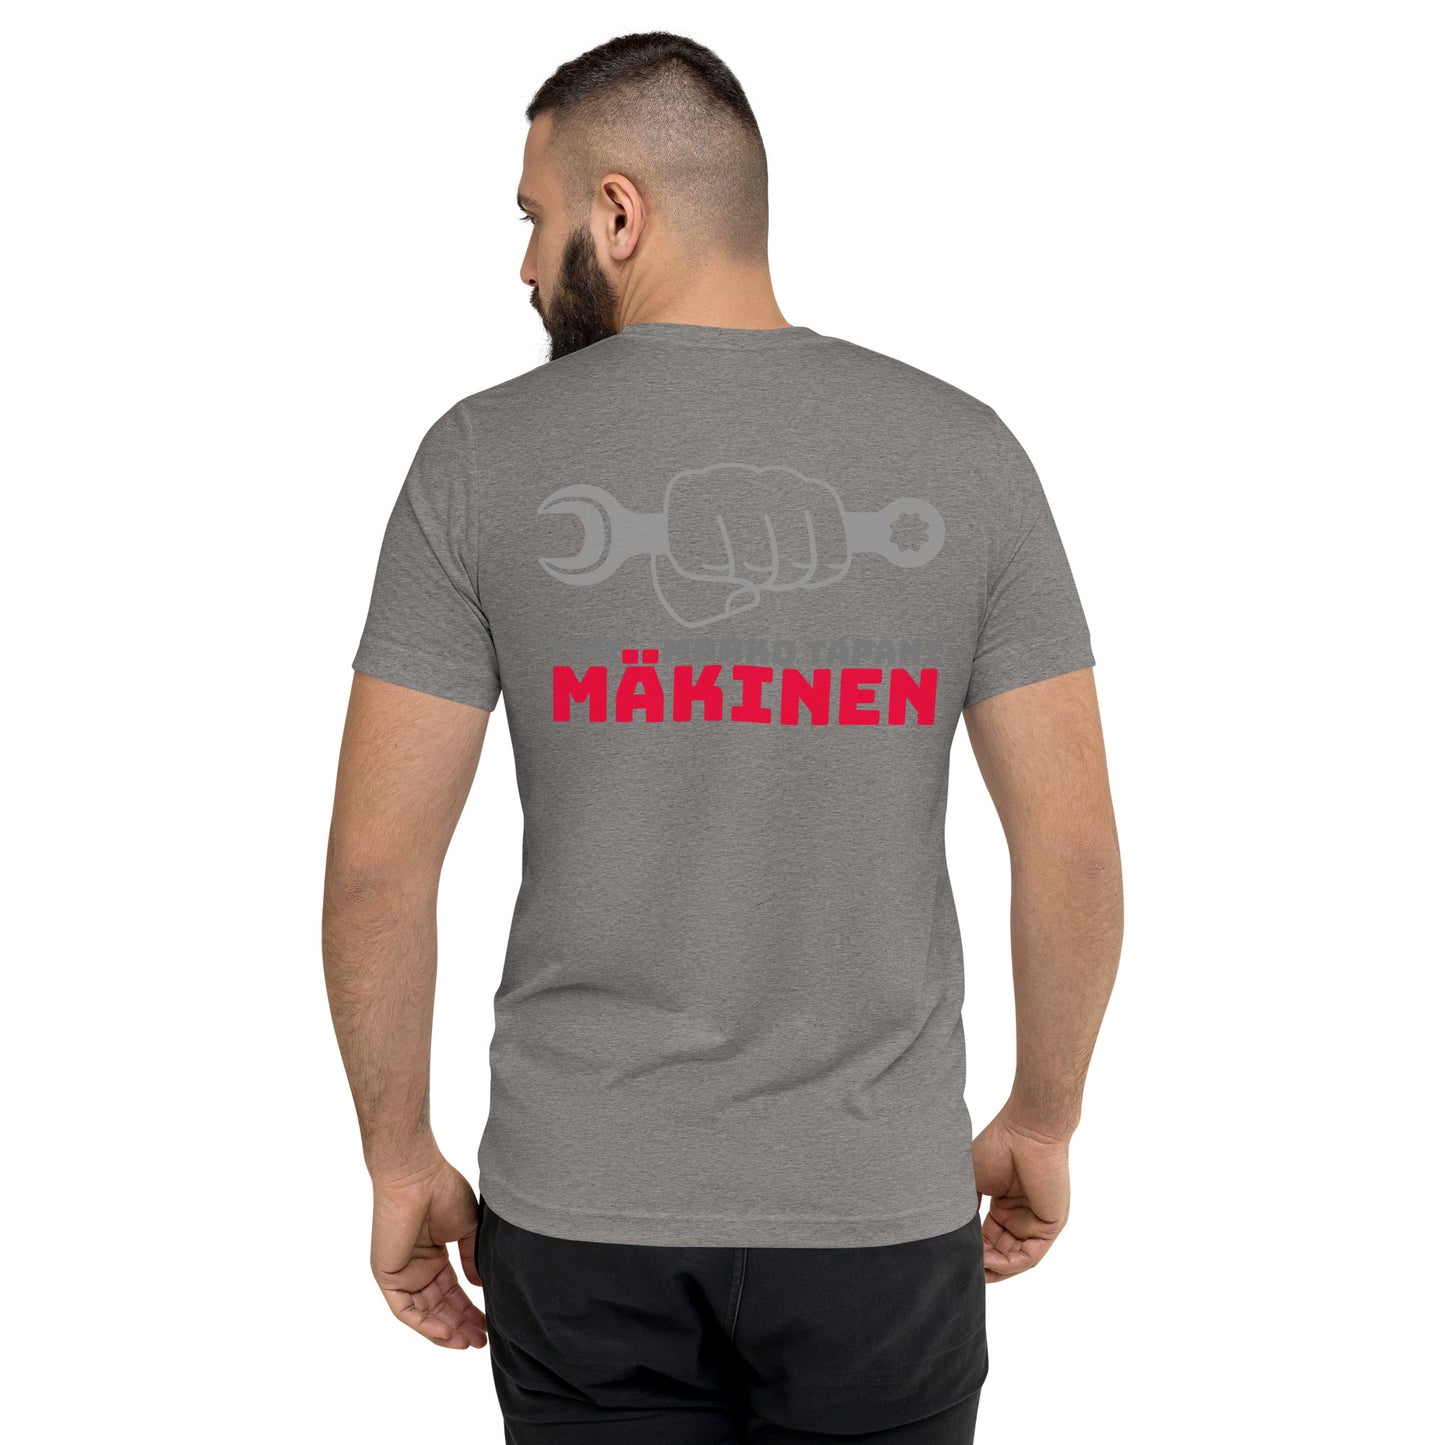 "T:mi Marko Tapani Mäkinen" t-shirt with back picture